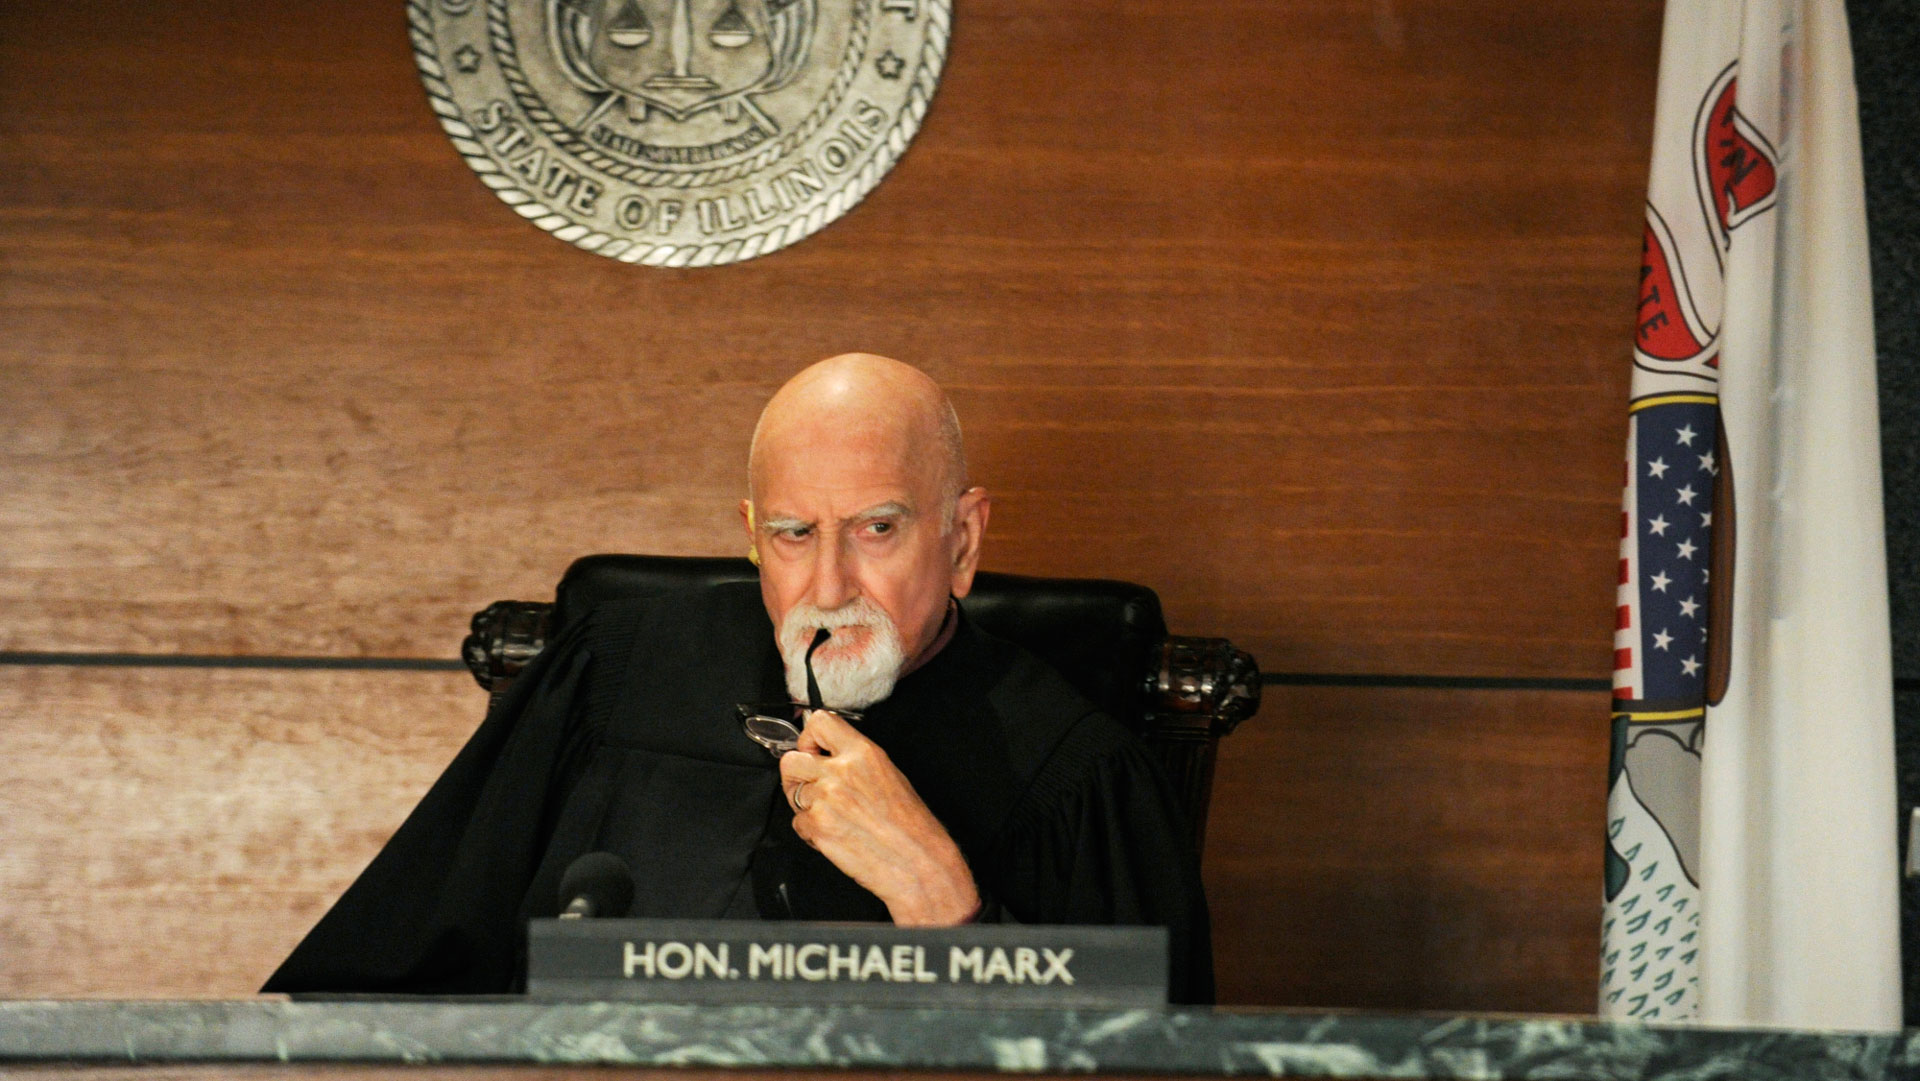 Judge Michael Marx (Dominic Chianese)